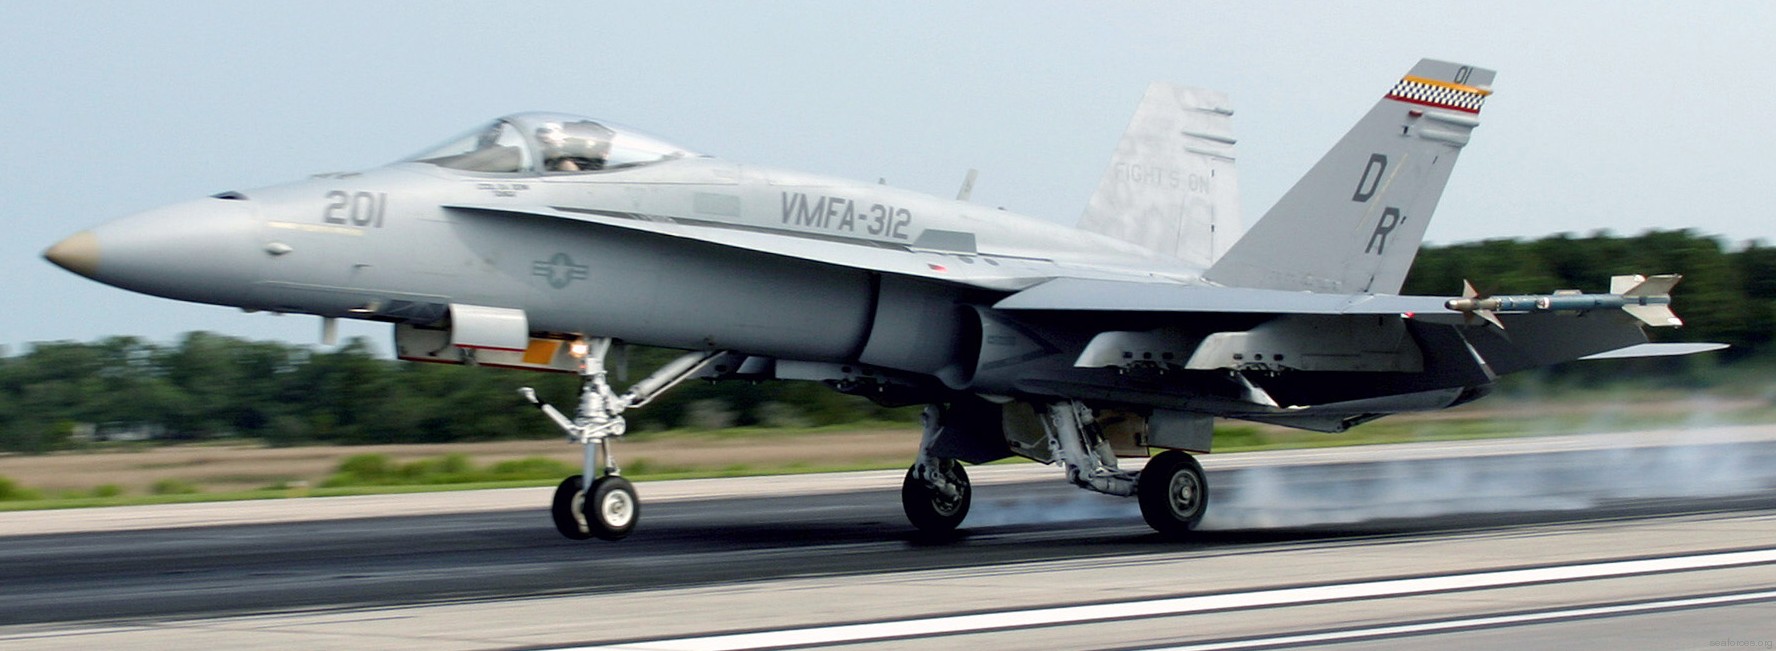 vmfa-312 checkerboards marine fighter attack squadron usmc f/a-18a+ hornet mcas beaufort south carolina 79